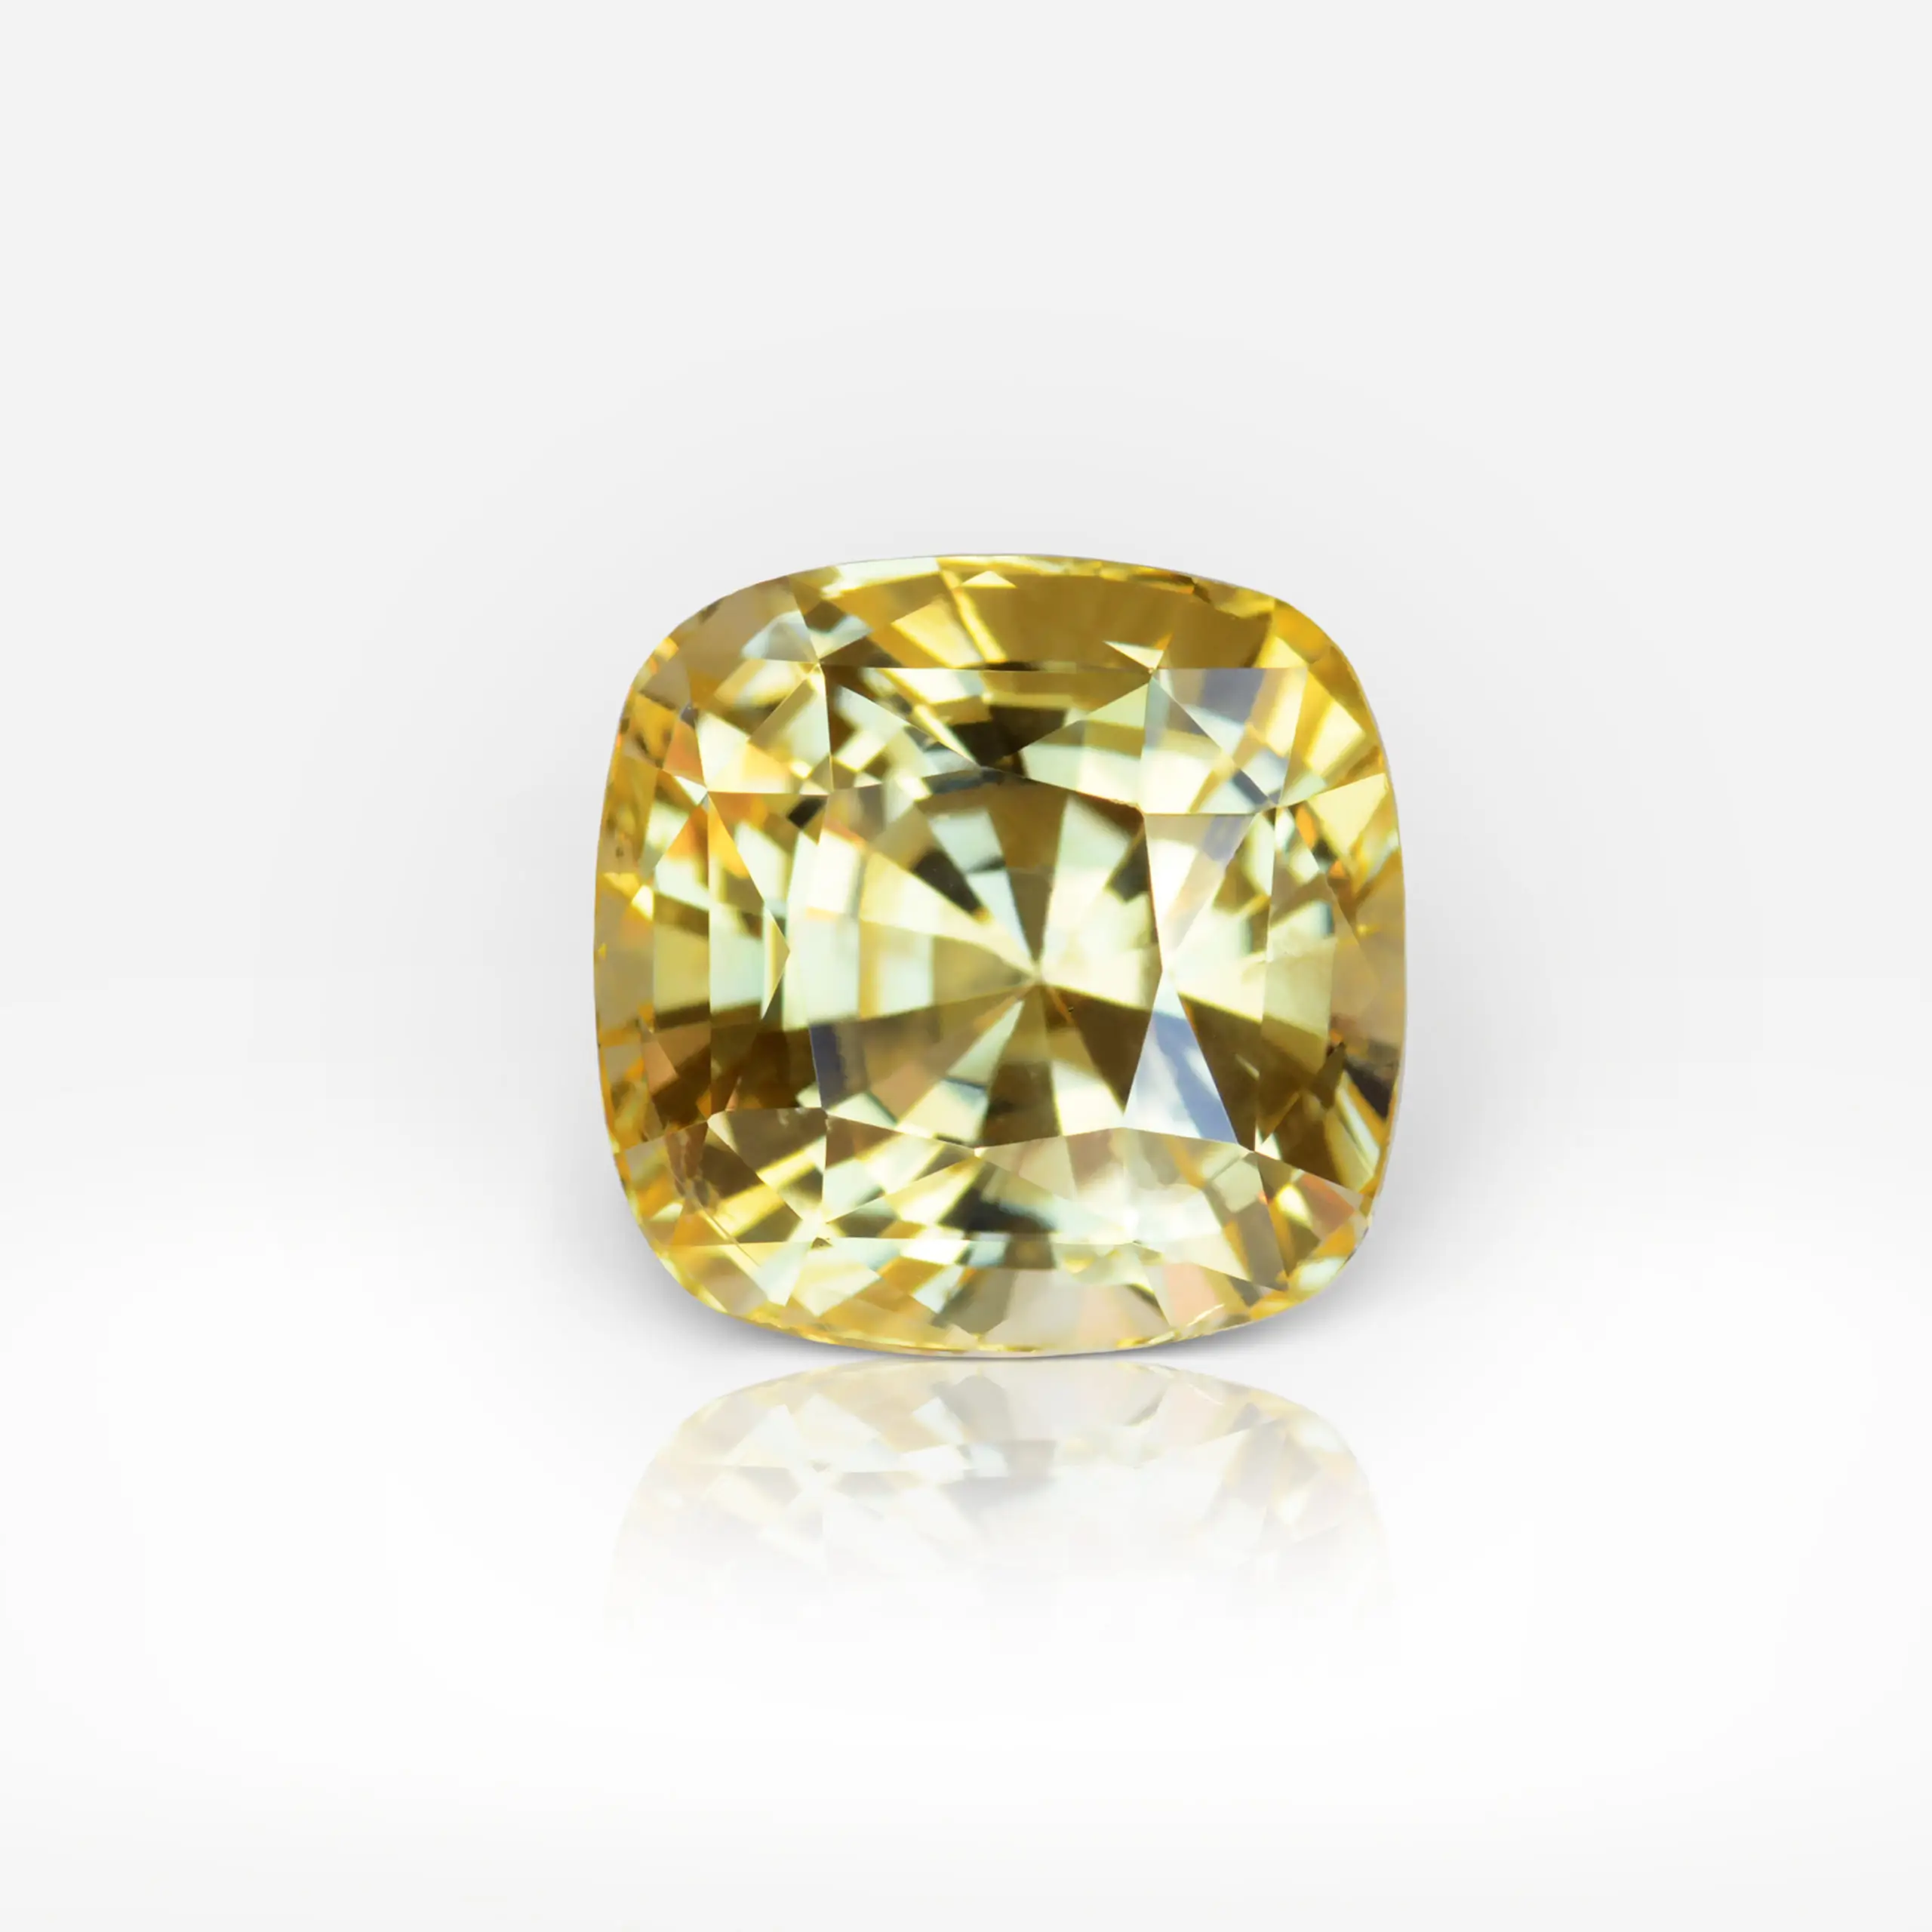 6,50 carat Cushion Shape Sri Lankan Yellow Sapphire - picture 1